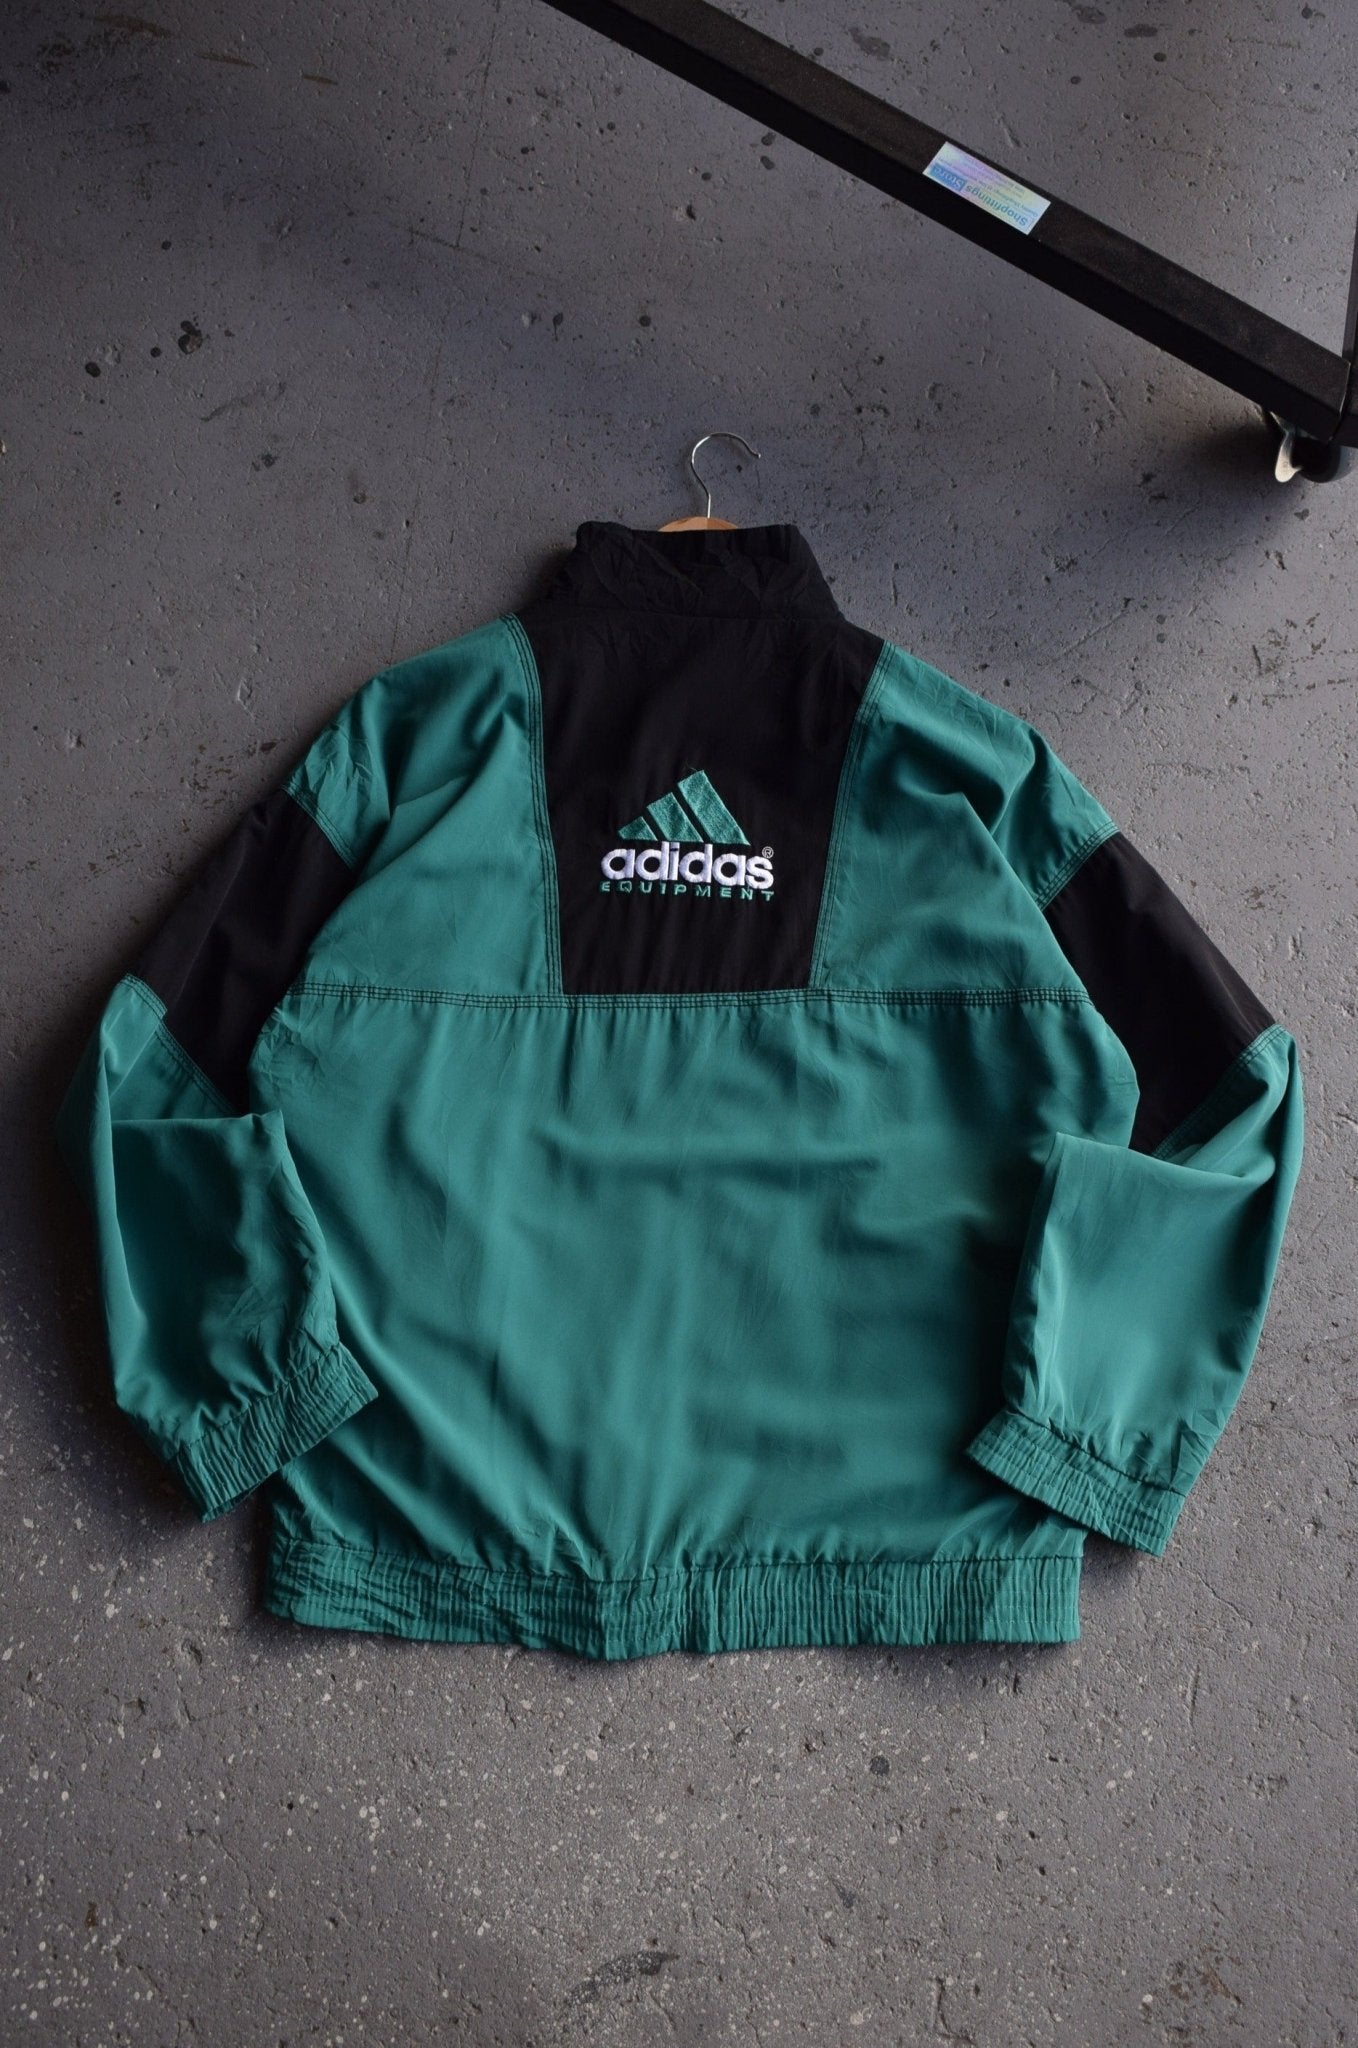 Vintage 90s Adidas Equipment Embroidered Jacket (M) - Retrospective Store